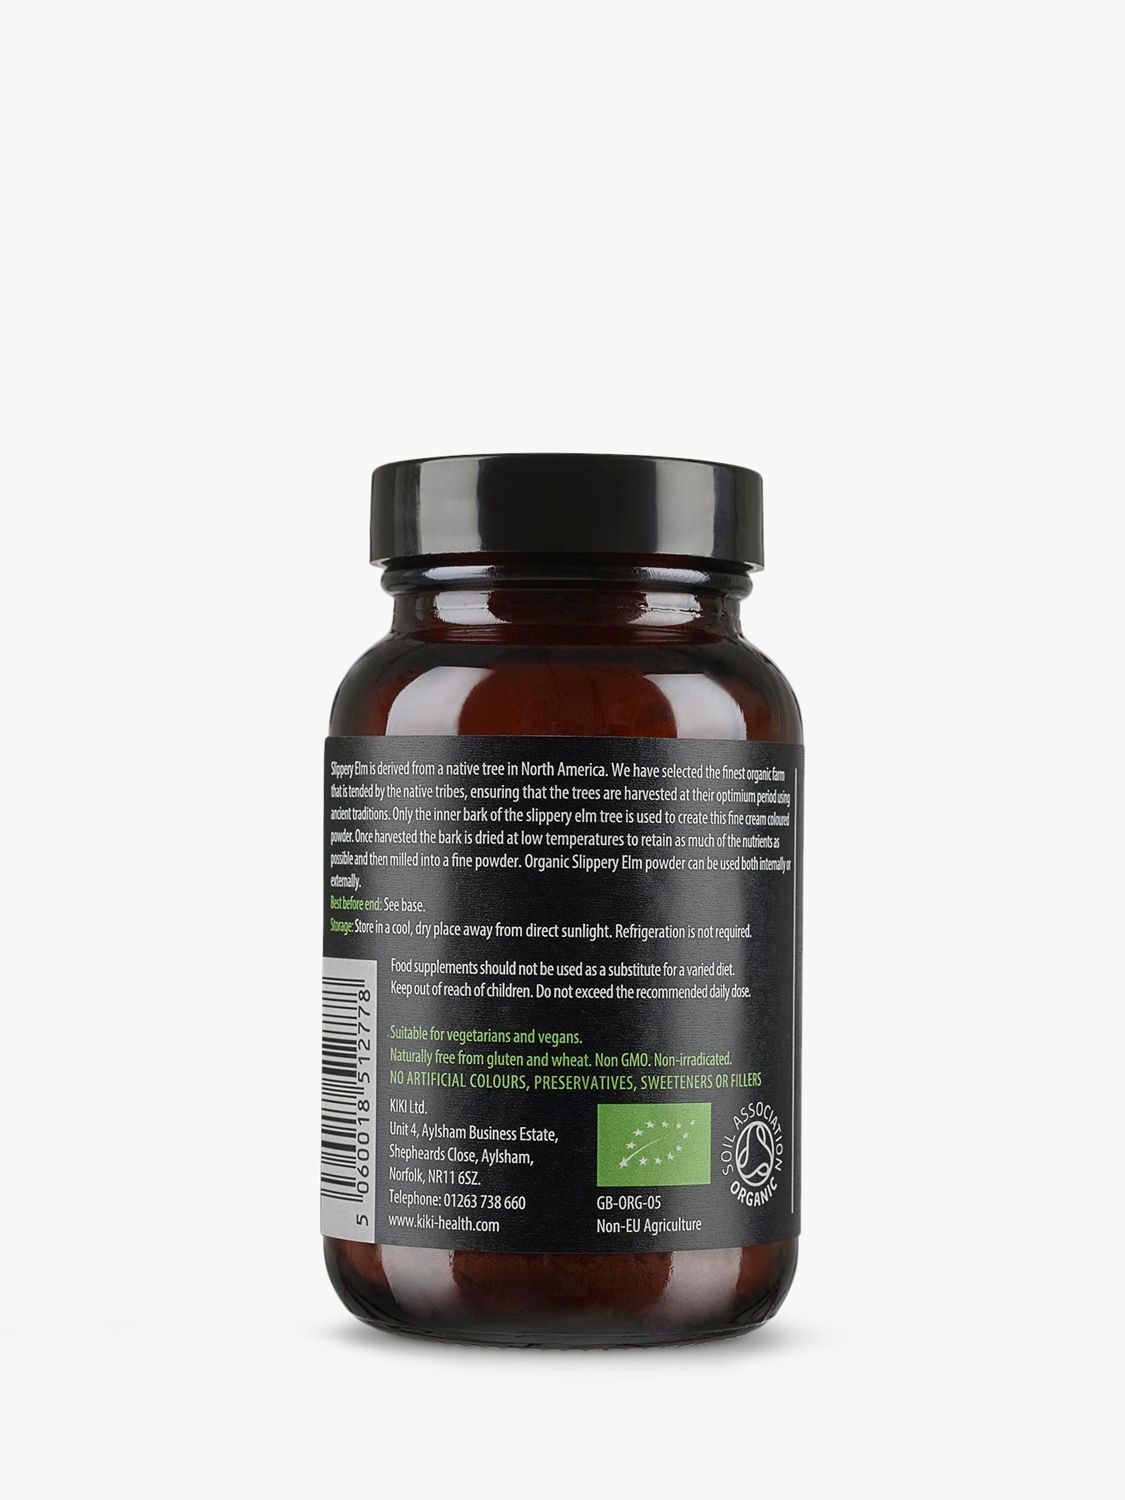 KIKI Health Organic Slippery Elm Powder, 45g